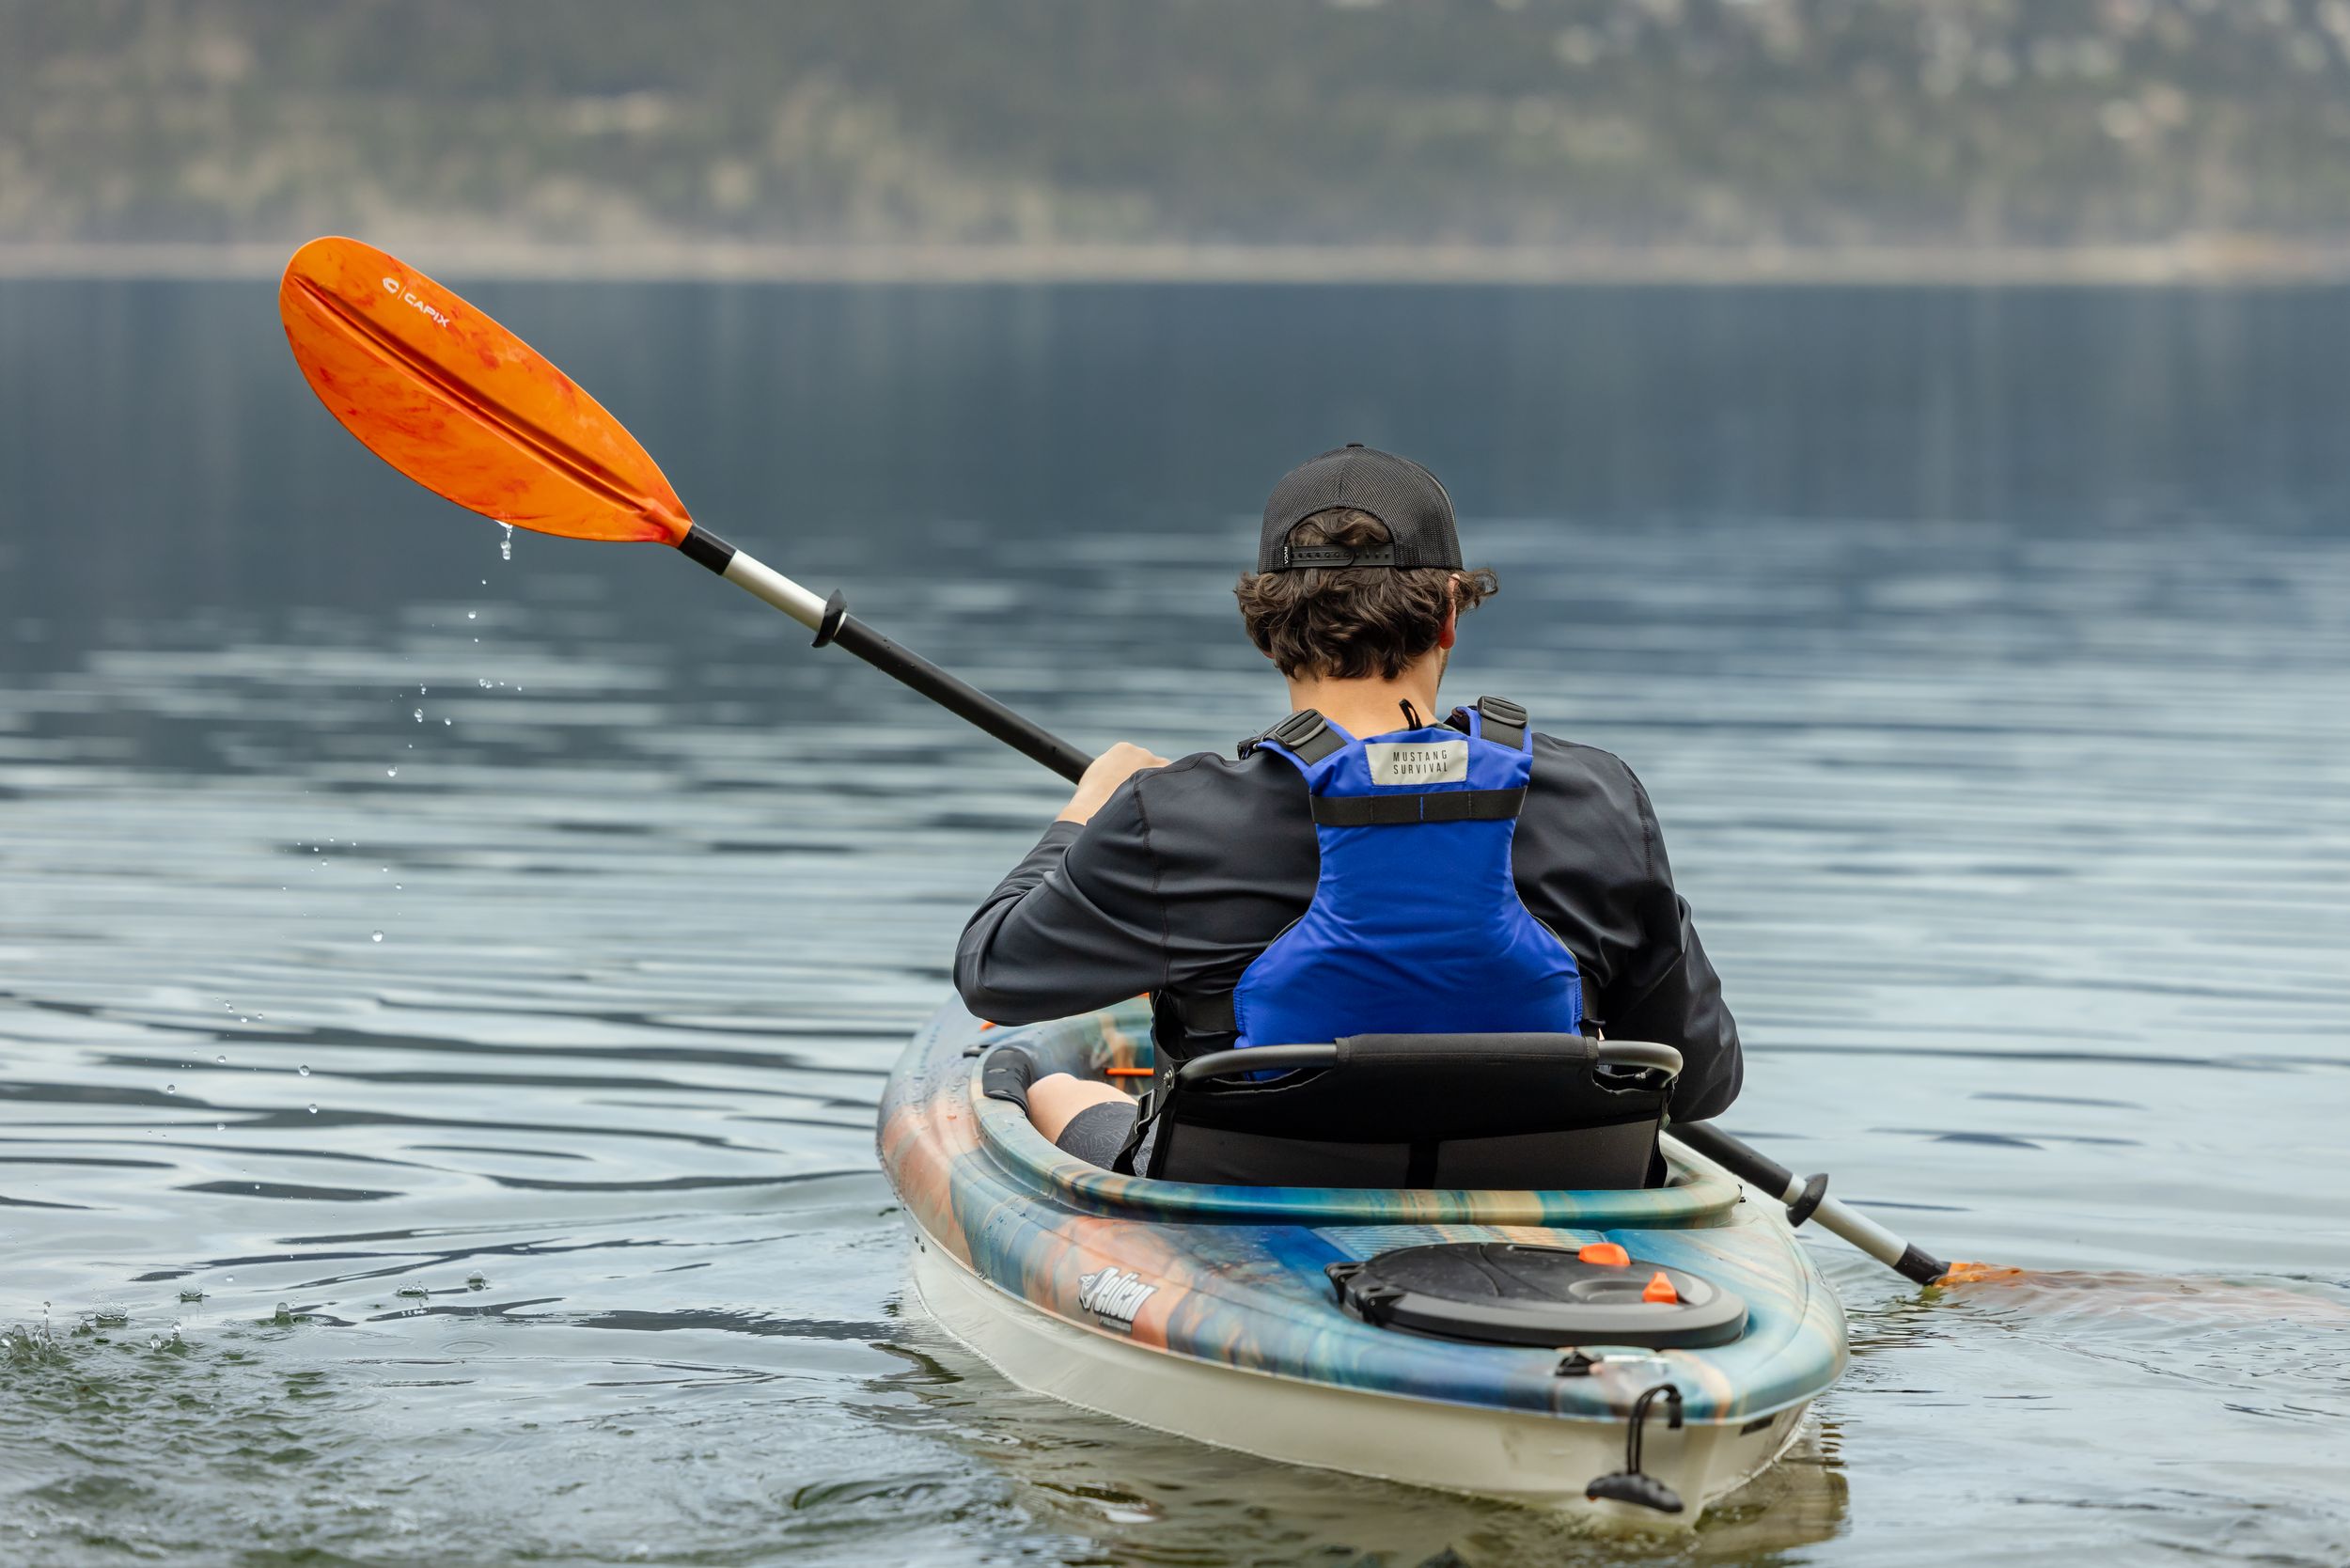 Argo 100XR Kayak  Sporting Life Online